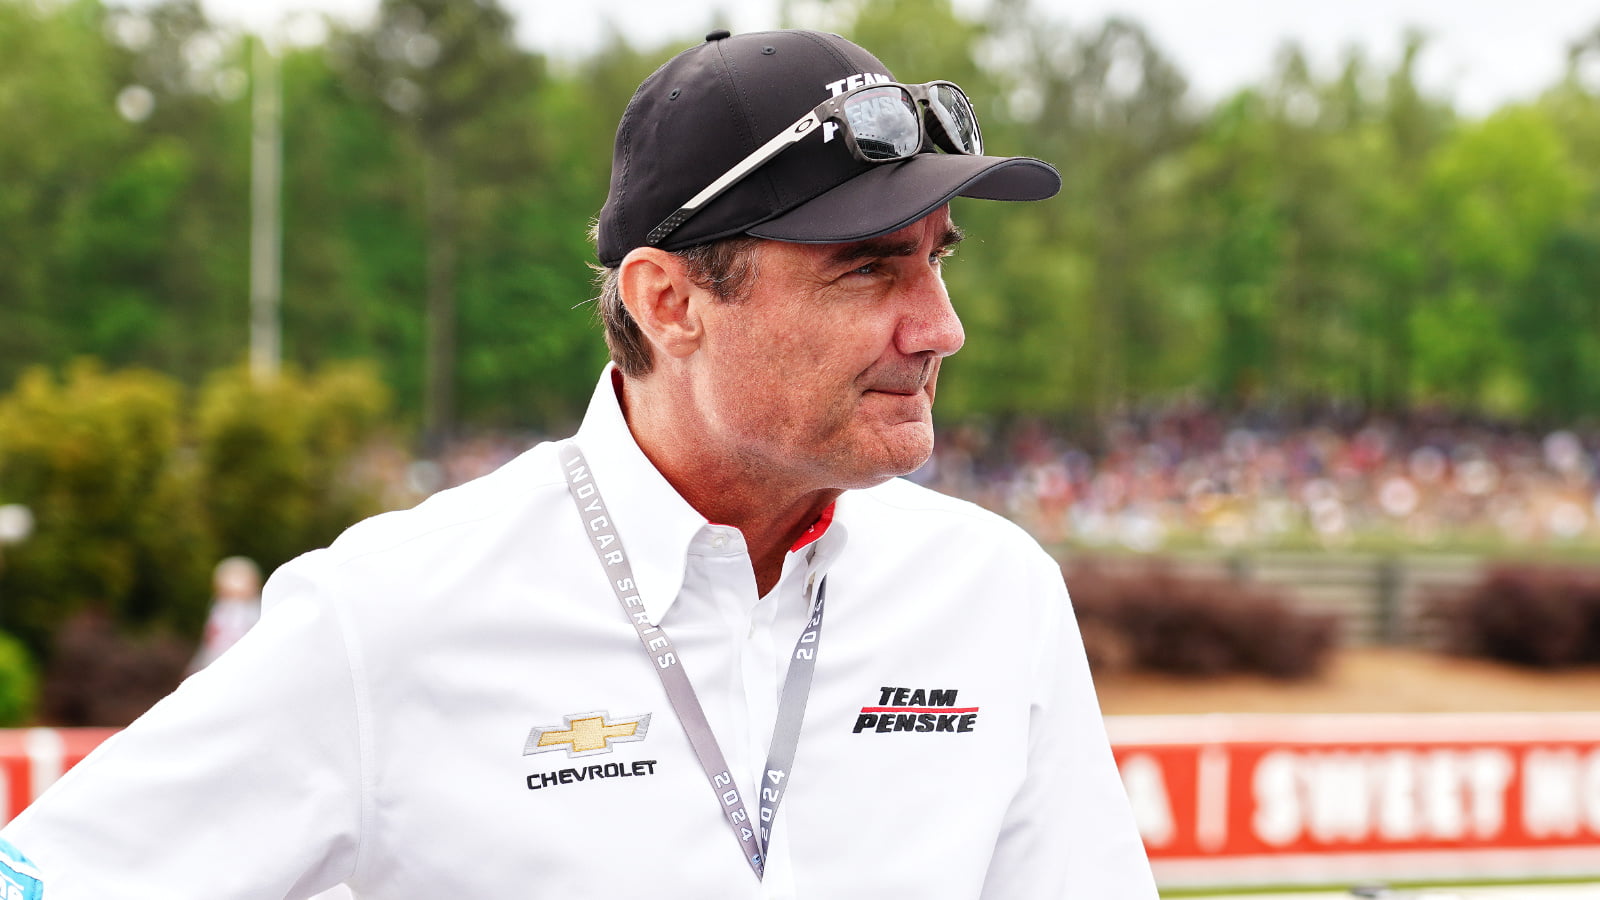 Shakeup at Team Penske: Key Management Suspended Ahead of Indy 500